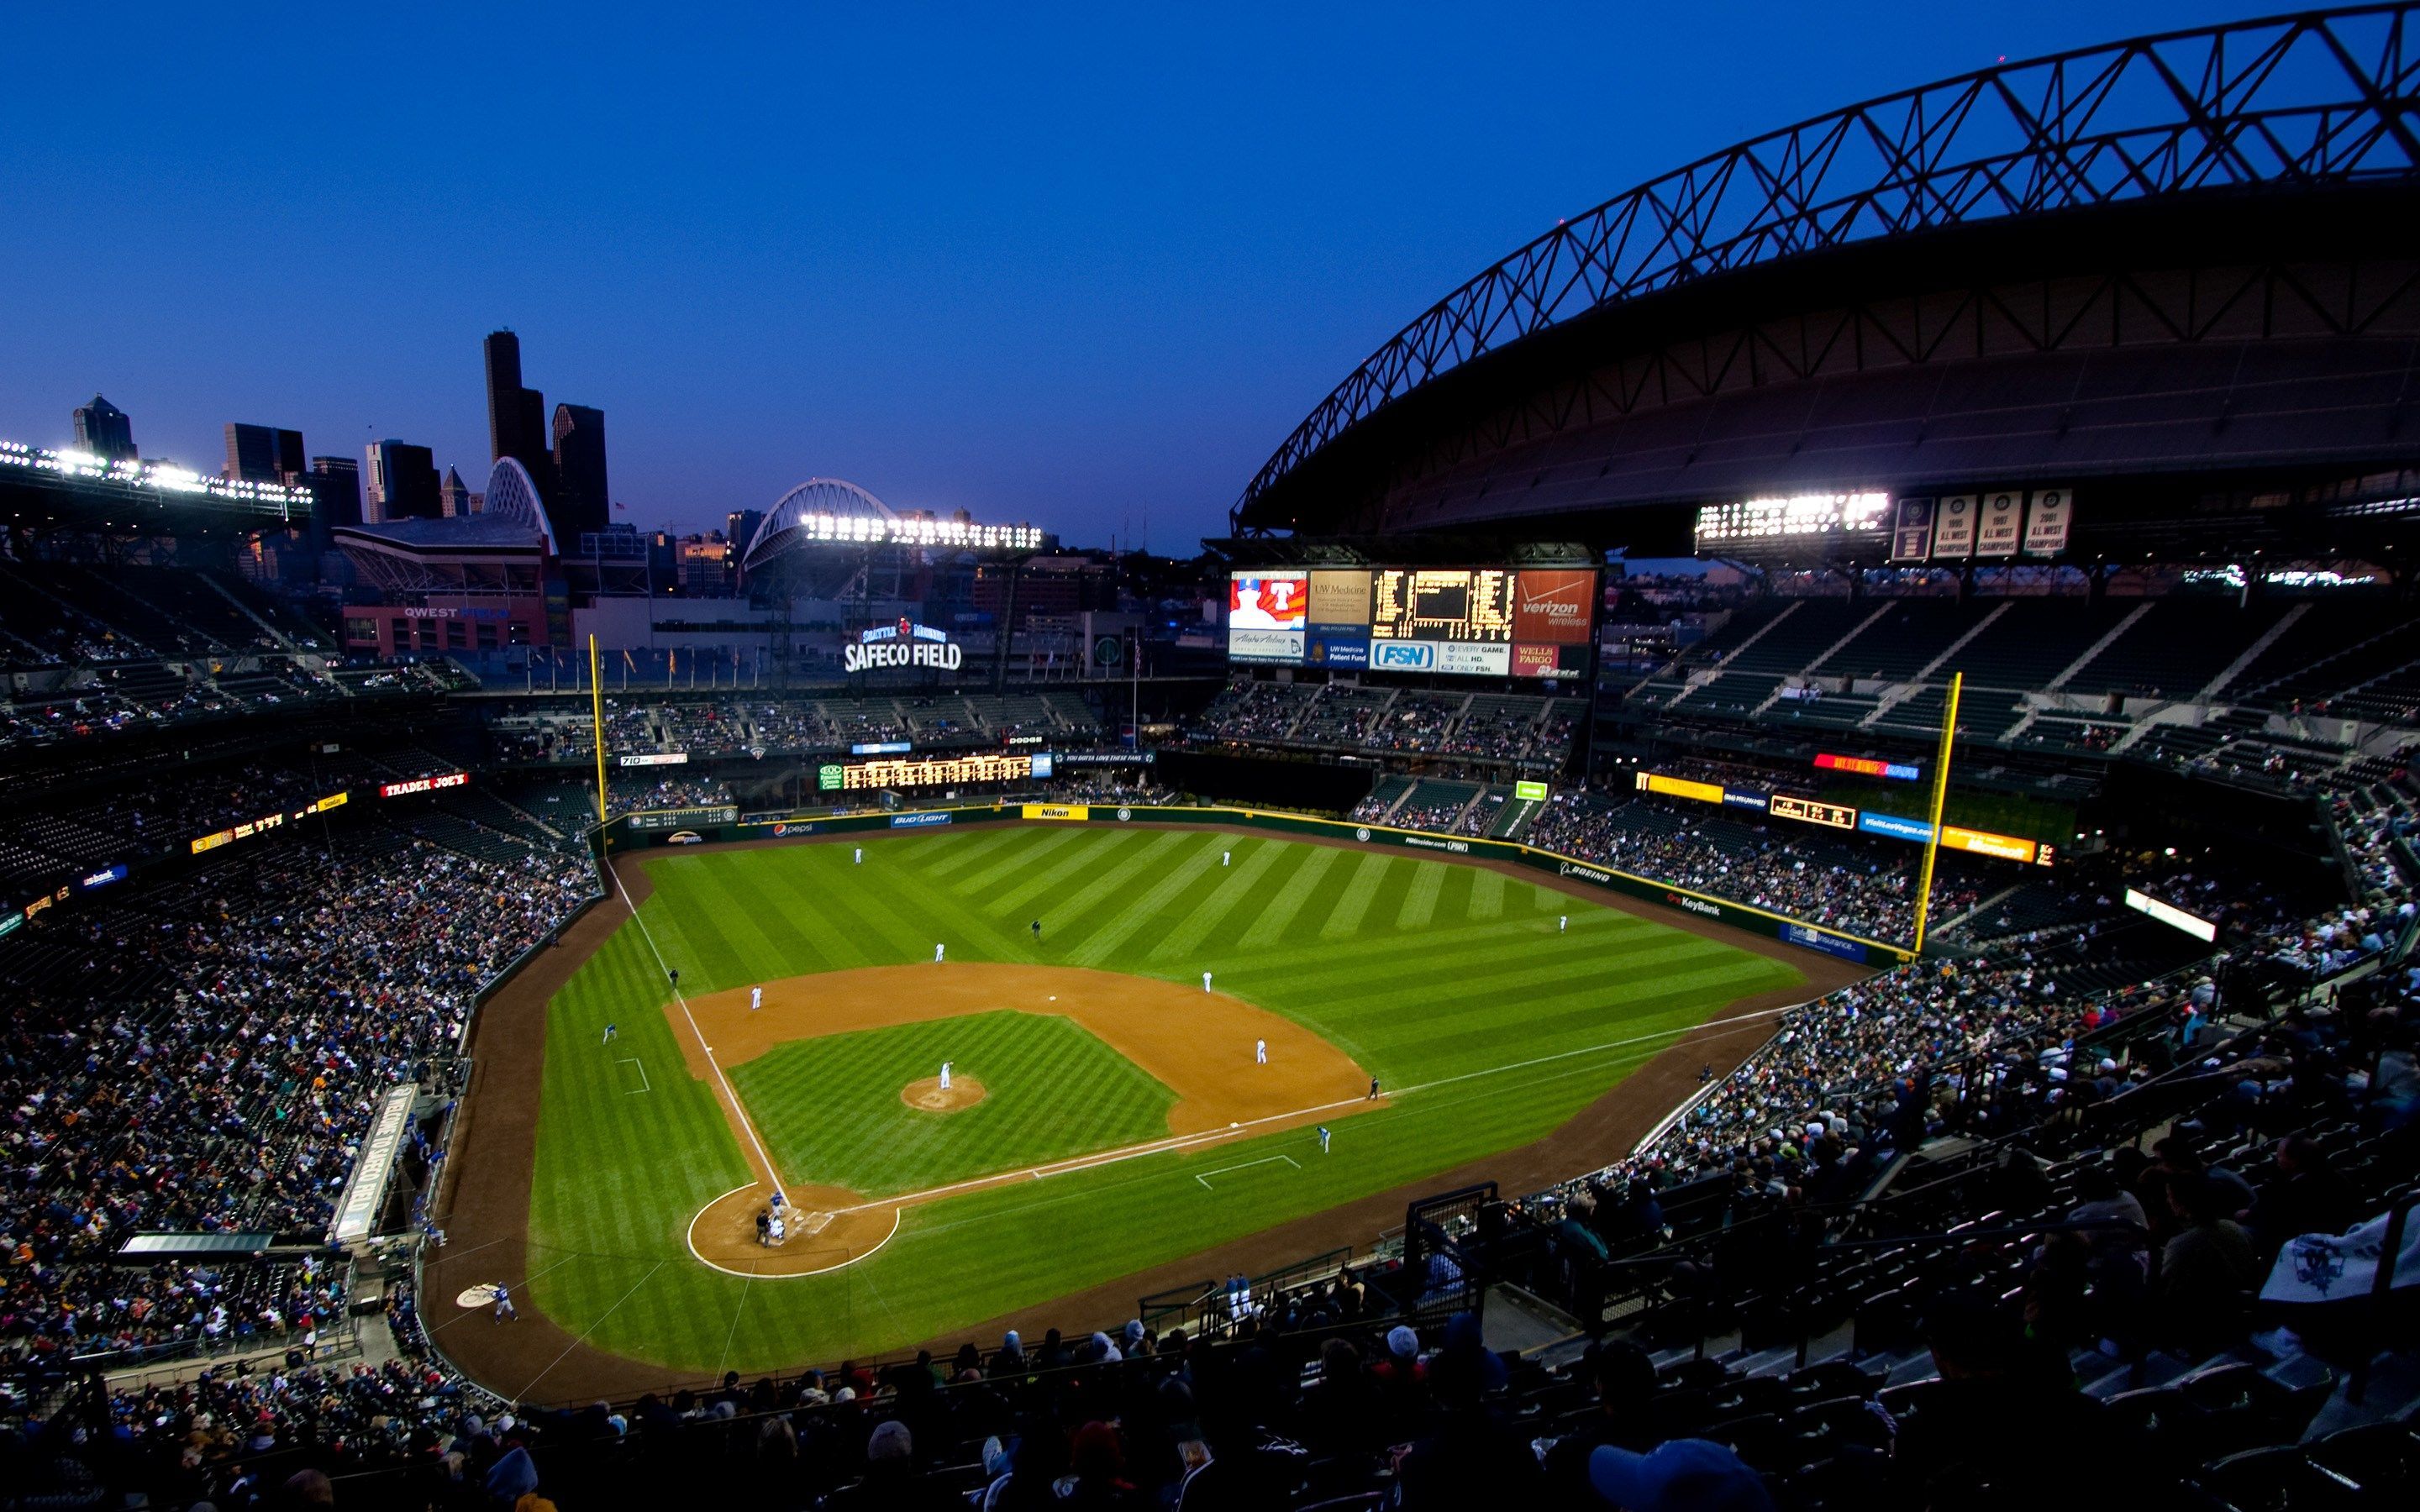 MLB Seattle Mariners 6x19 Stadium 3D View Banner